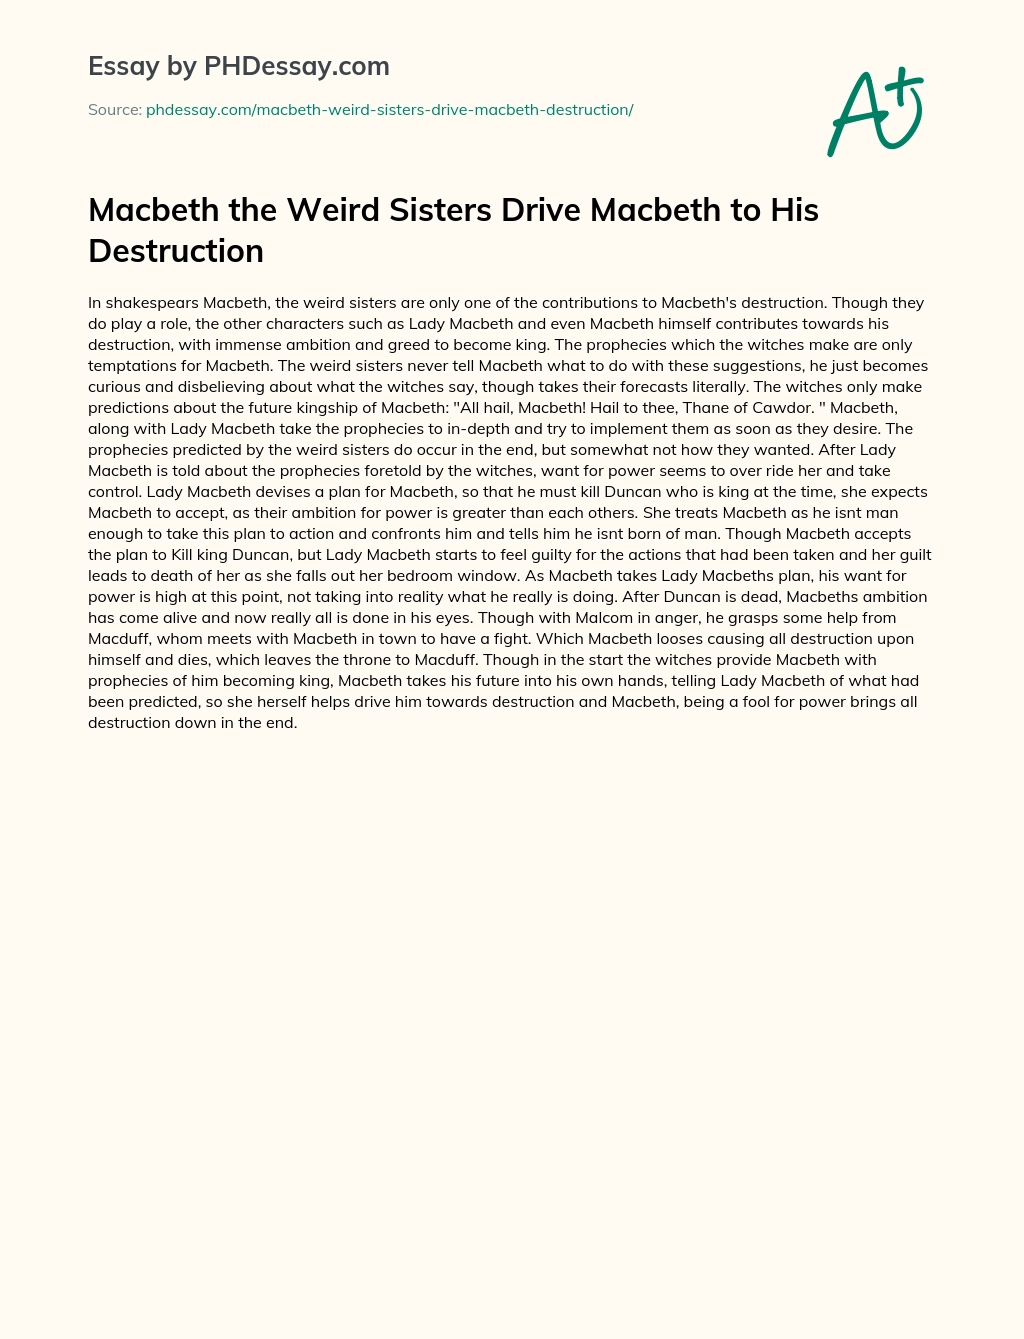 Macbeth the Weird Sisters Drive Macbeth to His Destruction essay